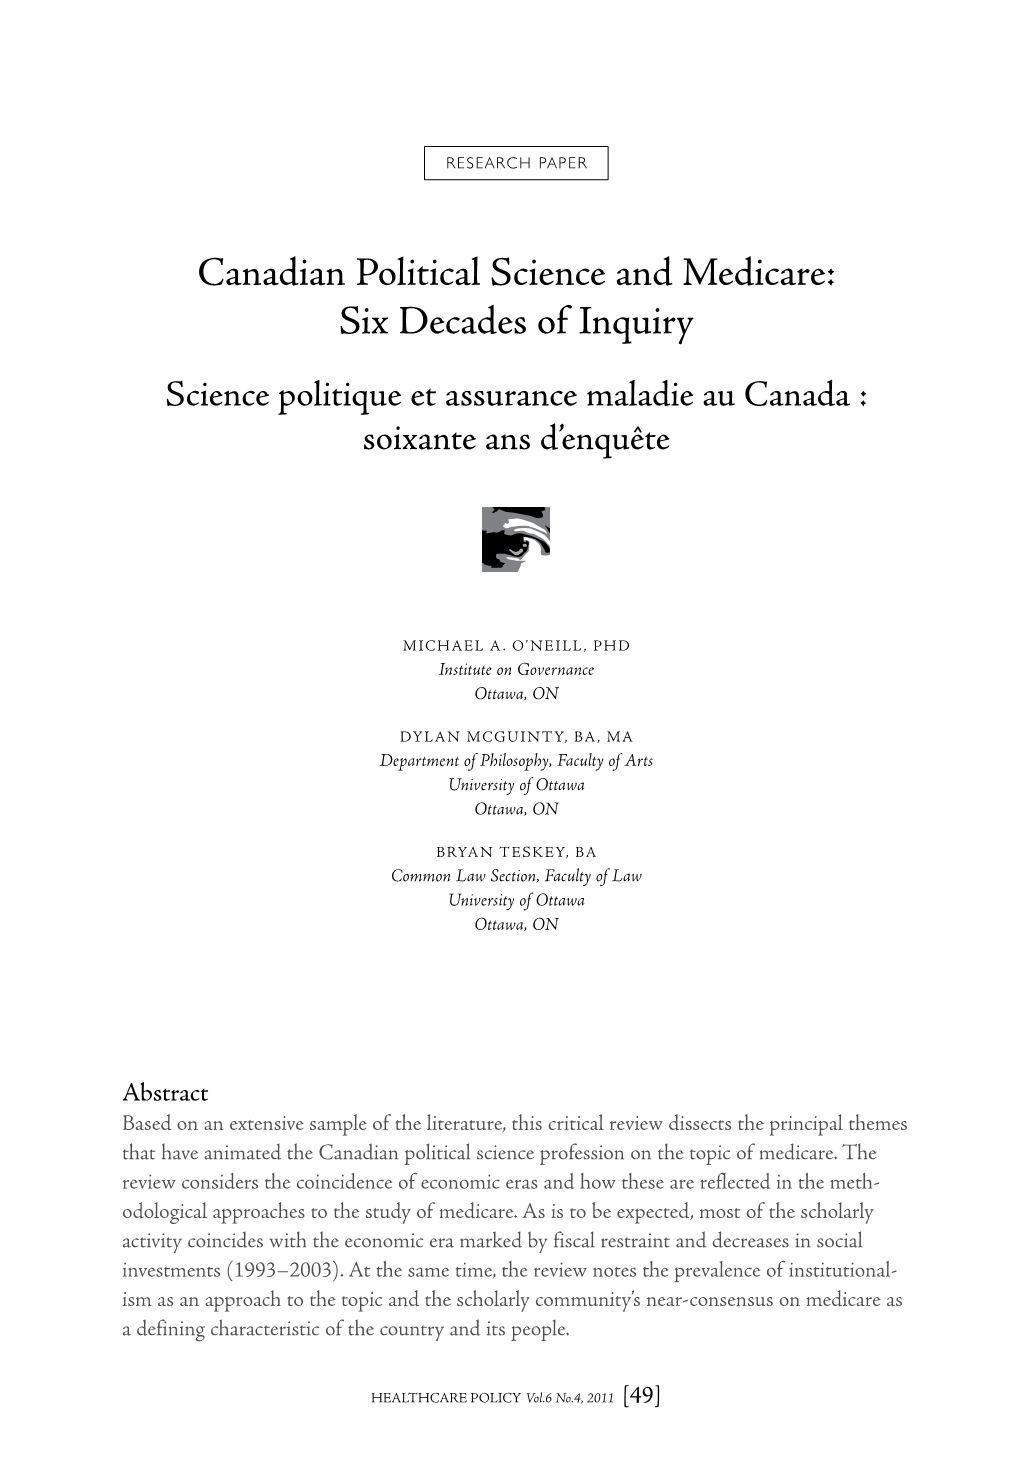 Canadian Political Science and Medicare: Six Decades of Inquiry Science Politique Et Assurance Maladie Au Canada : Soixante Ans D’Enquête